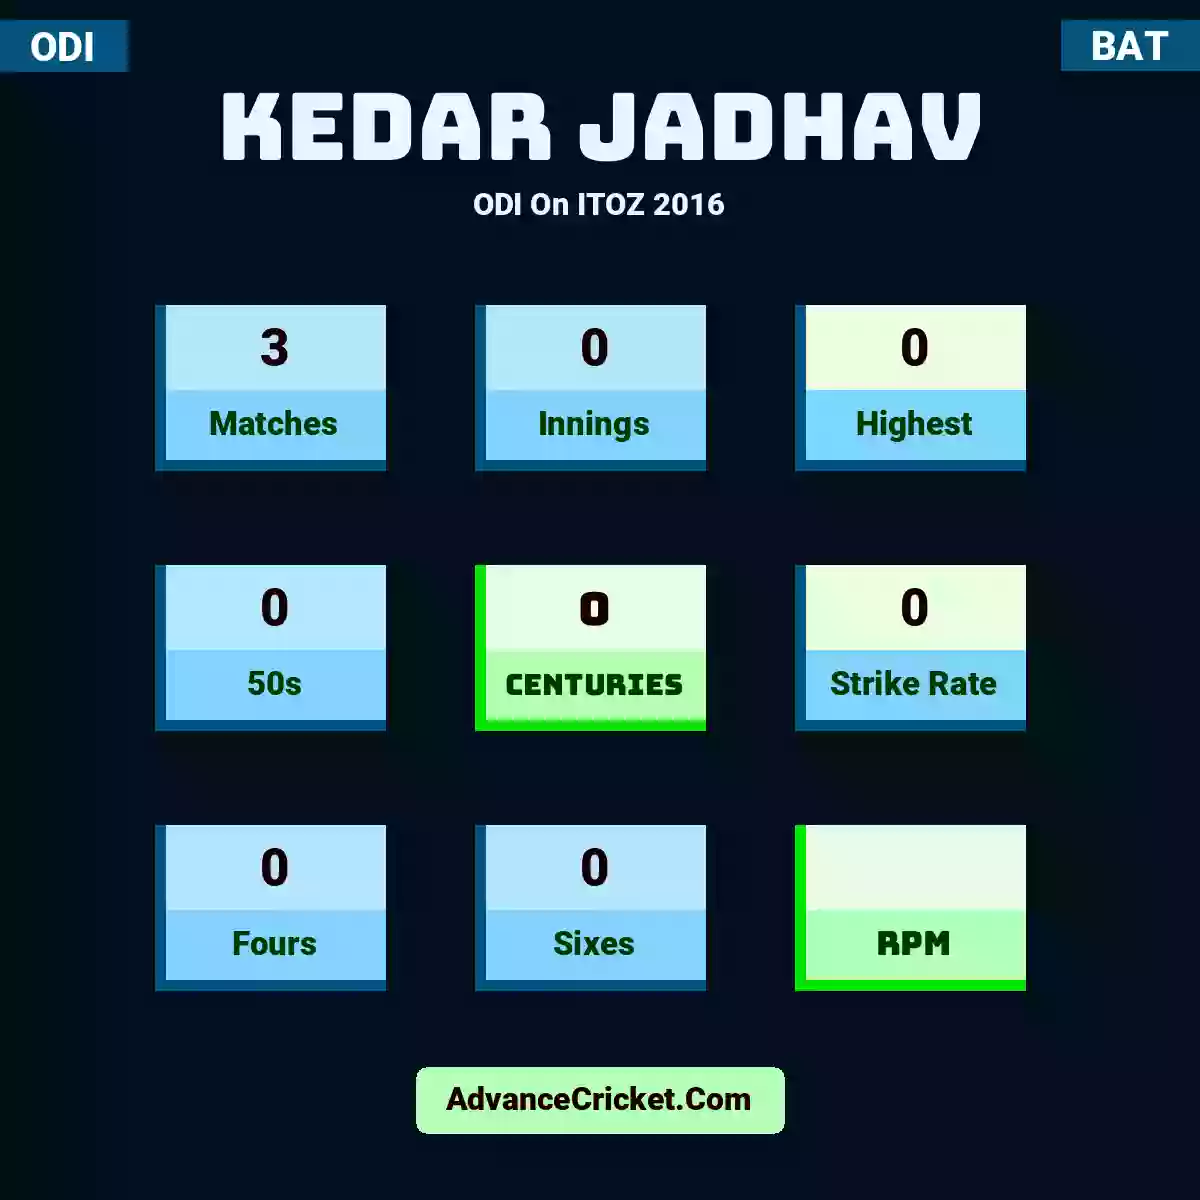 Kedar Jadhav ODI  On ITOZ 2016, Kedar Jadhav played 3 matches, scored 0 runs as highest, 0 half-centuries, and 0 centuries, with a strike rate of 0. K.Jadhav hit 0 fours and 0 sixes.